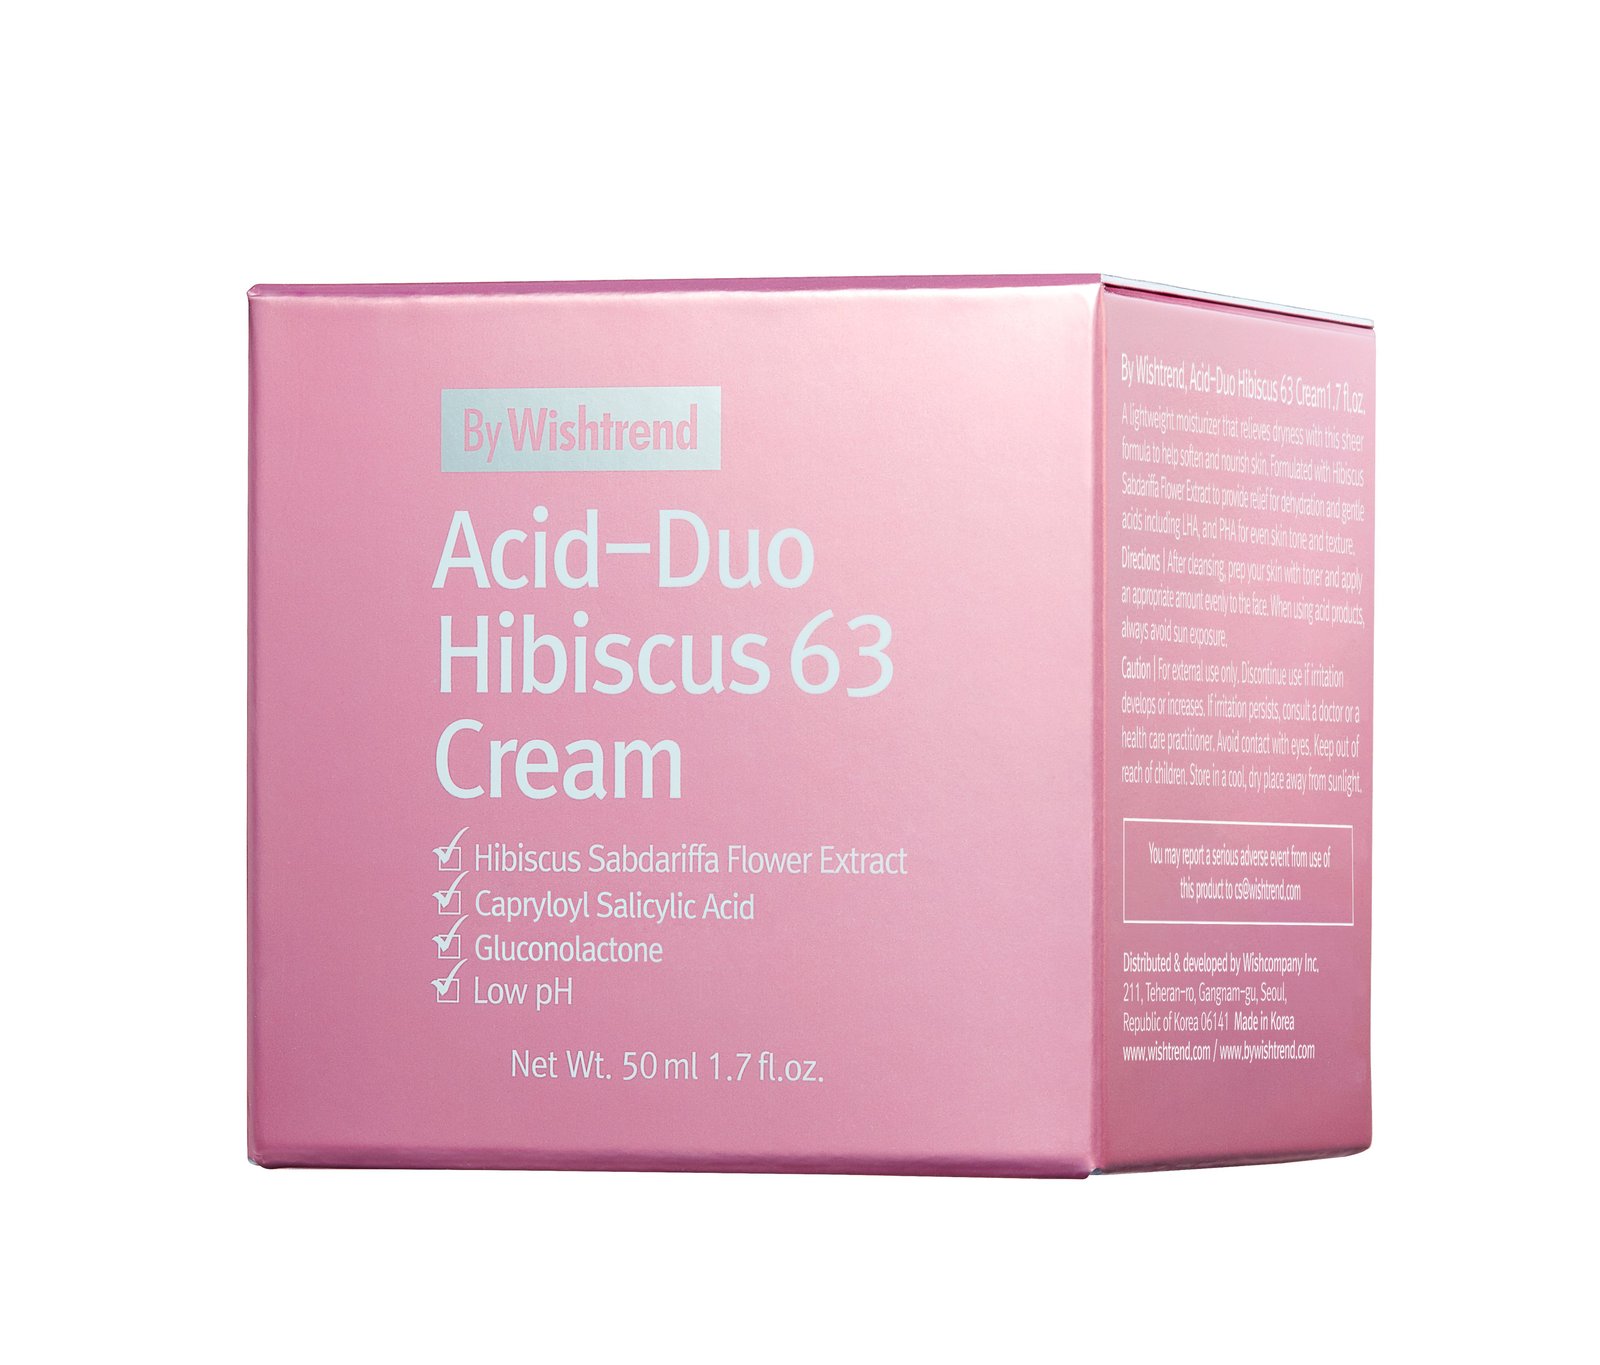 By Wishtrend Acid-duo Hibiscus 63 Cream 50 ml